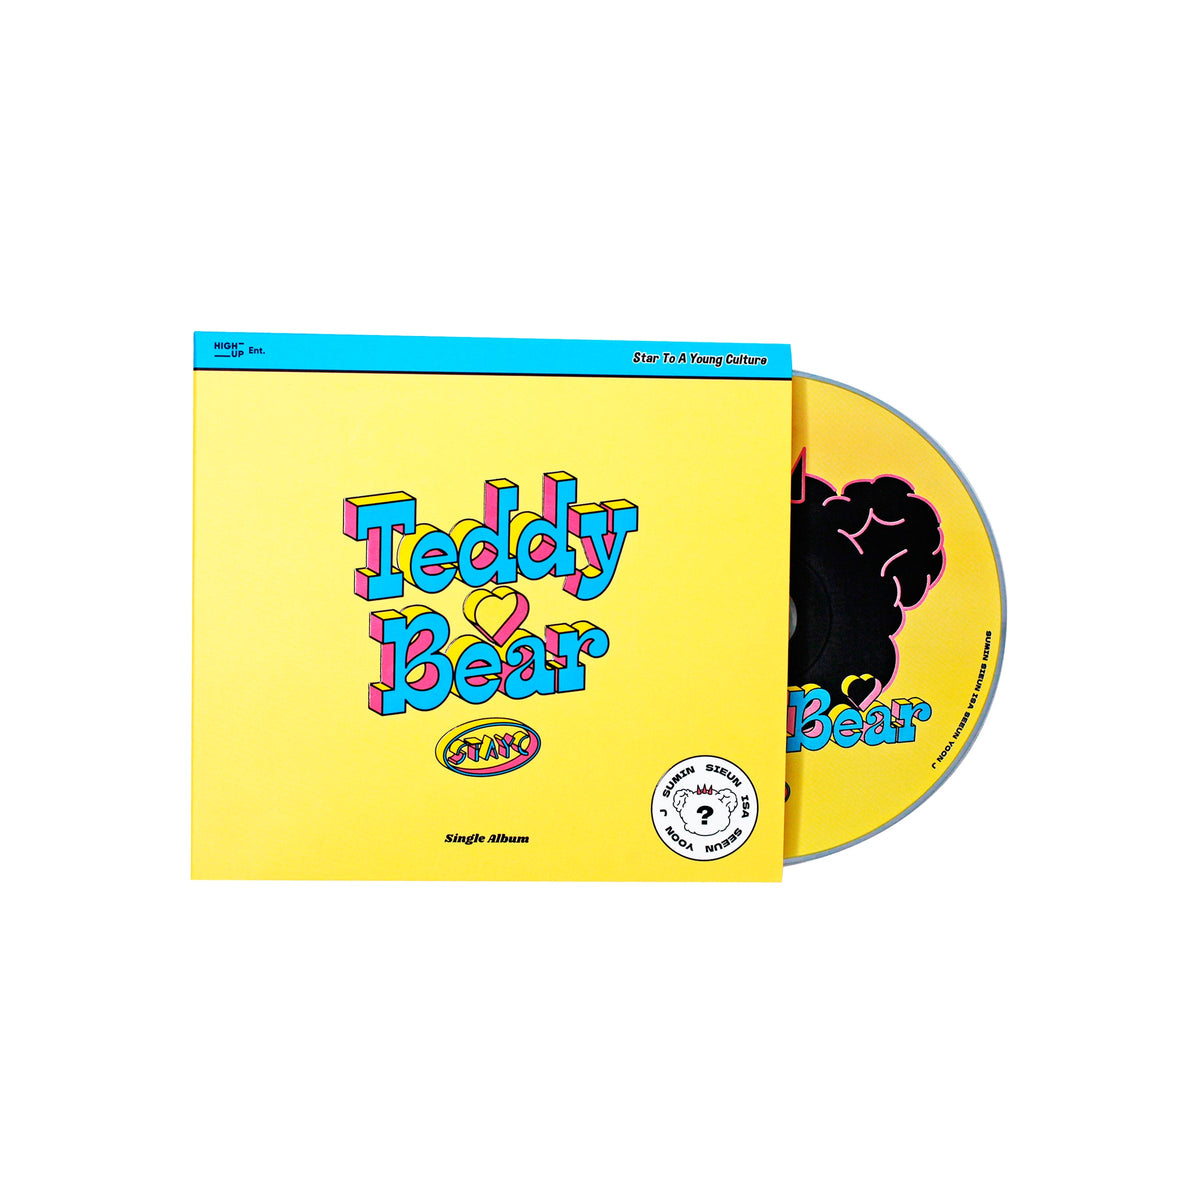 STAYC Teddy Bear 4th Single Album Digipack Version main product image 3